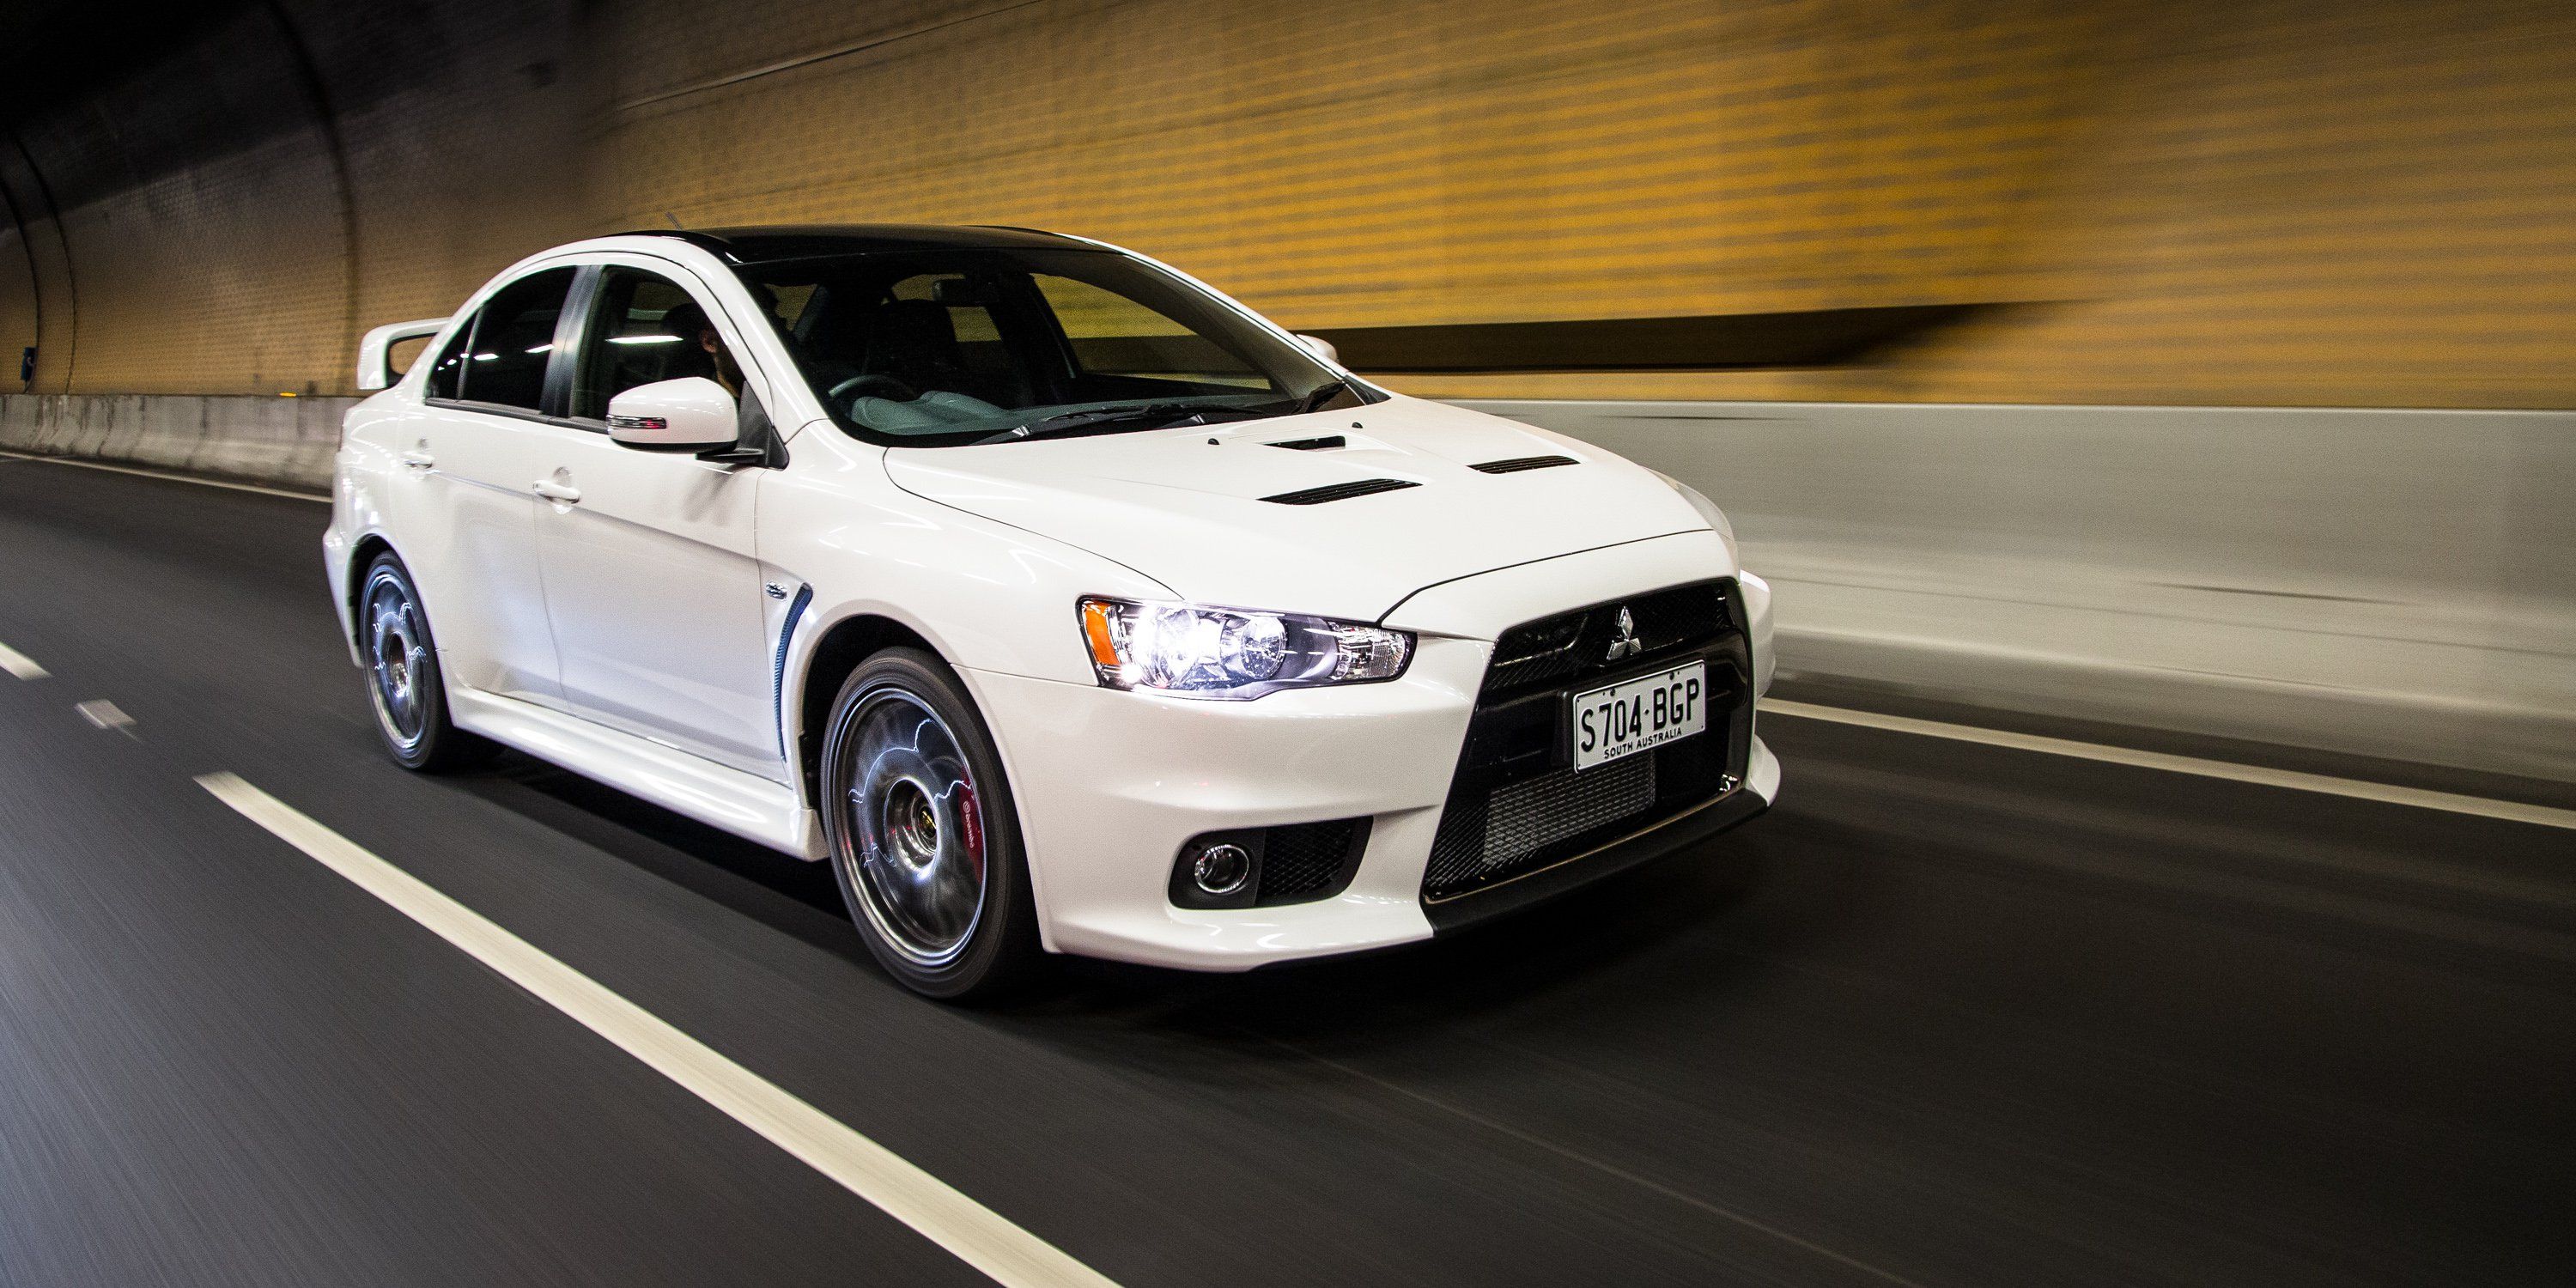 2014 Mitsubishi Lancer Evolution X in white, driving through a tunnel